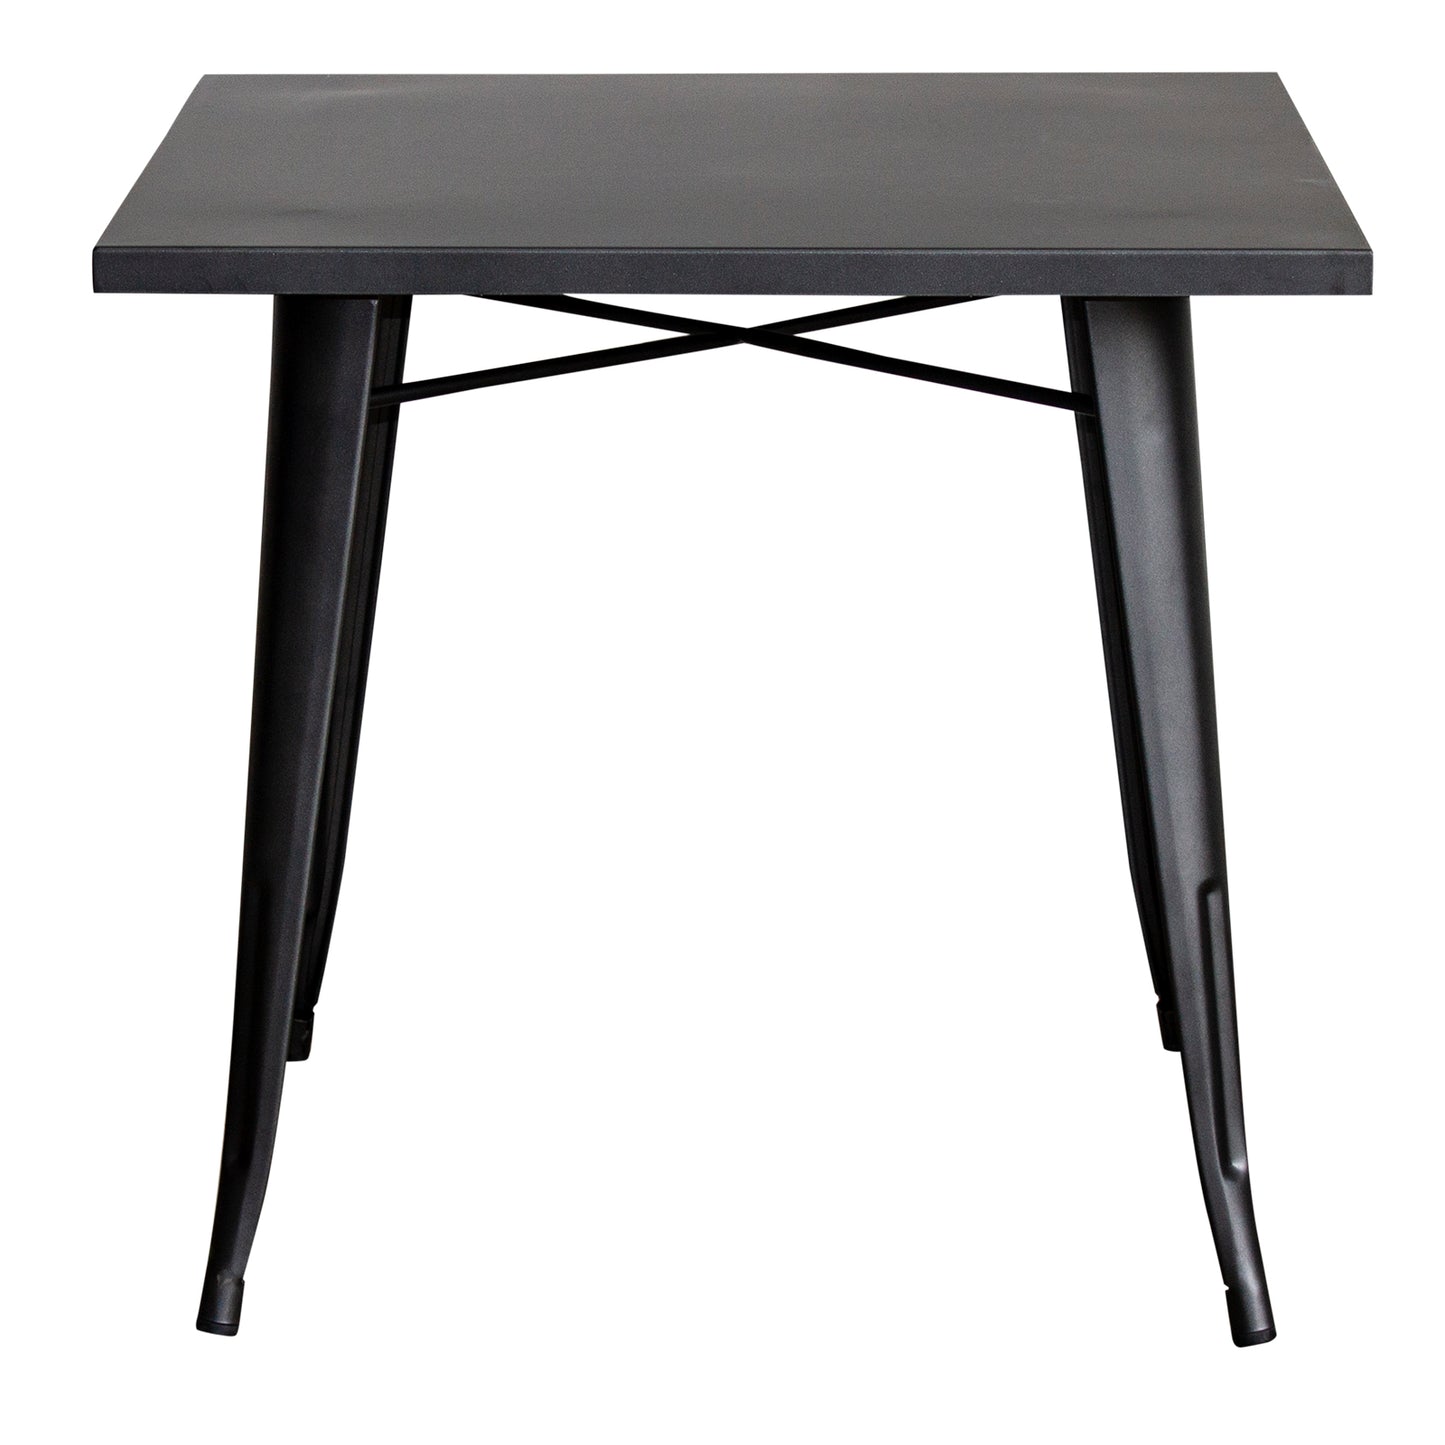 5PC Belvedere Table & Siena Chair Set - Onyx Matt Black